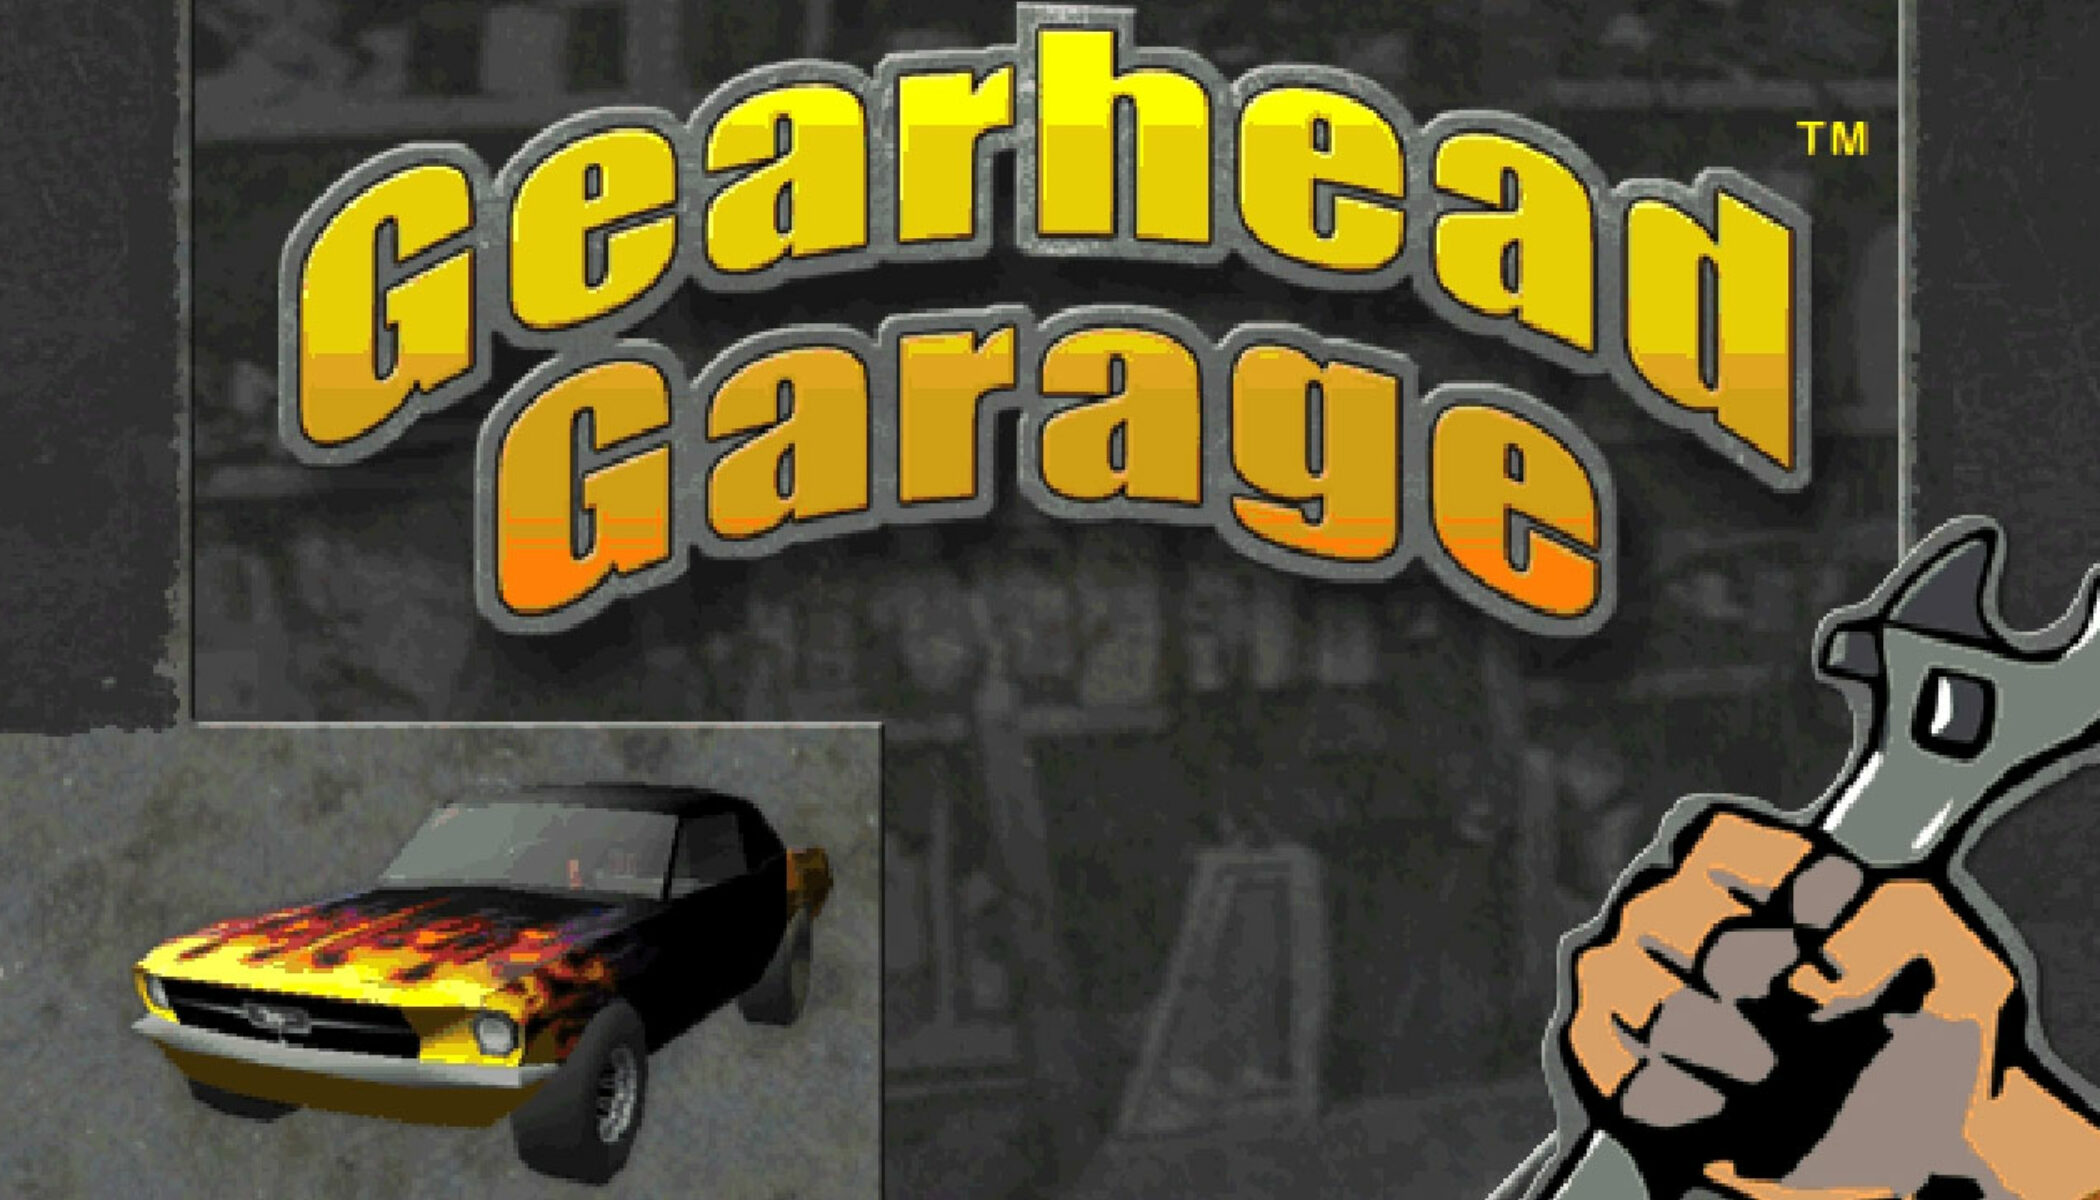 gearhead garage windows 10 download